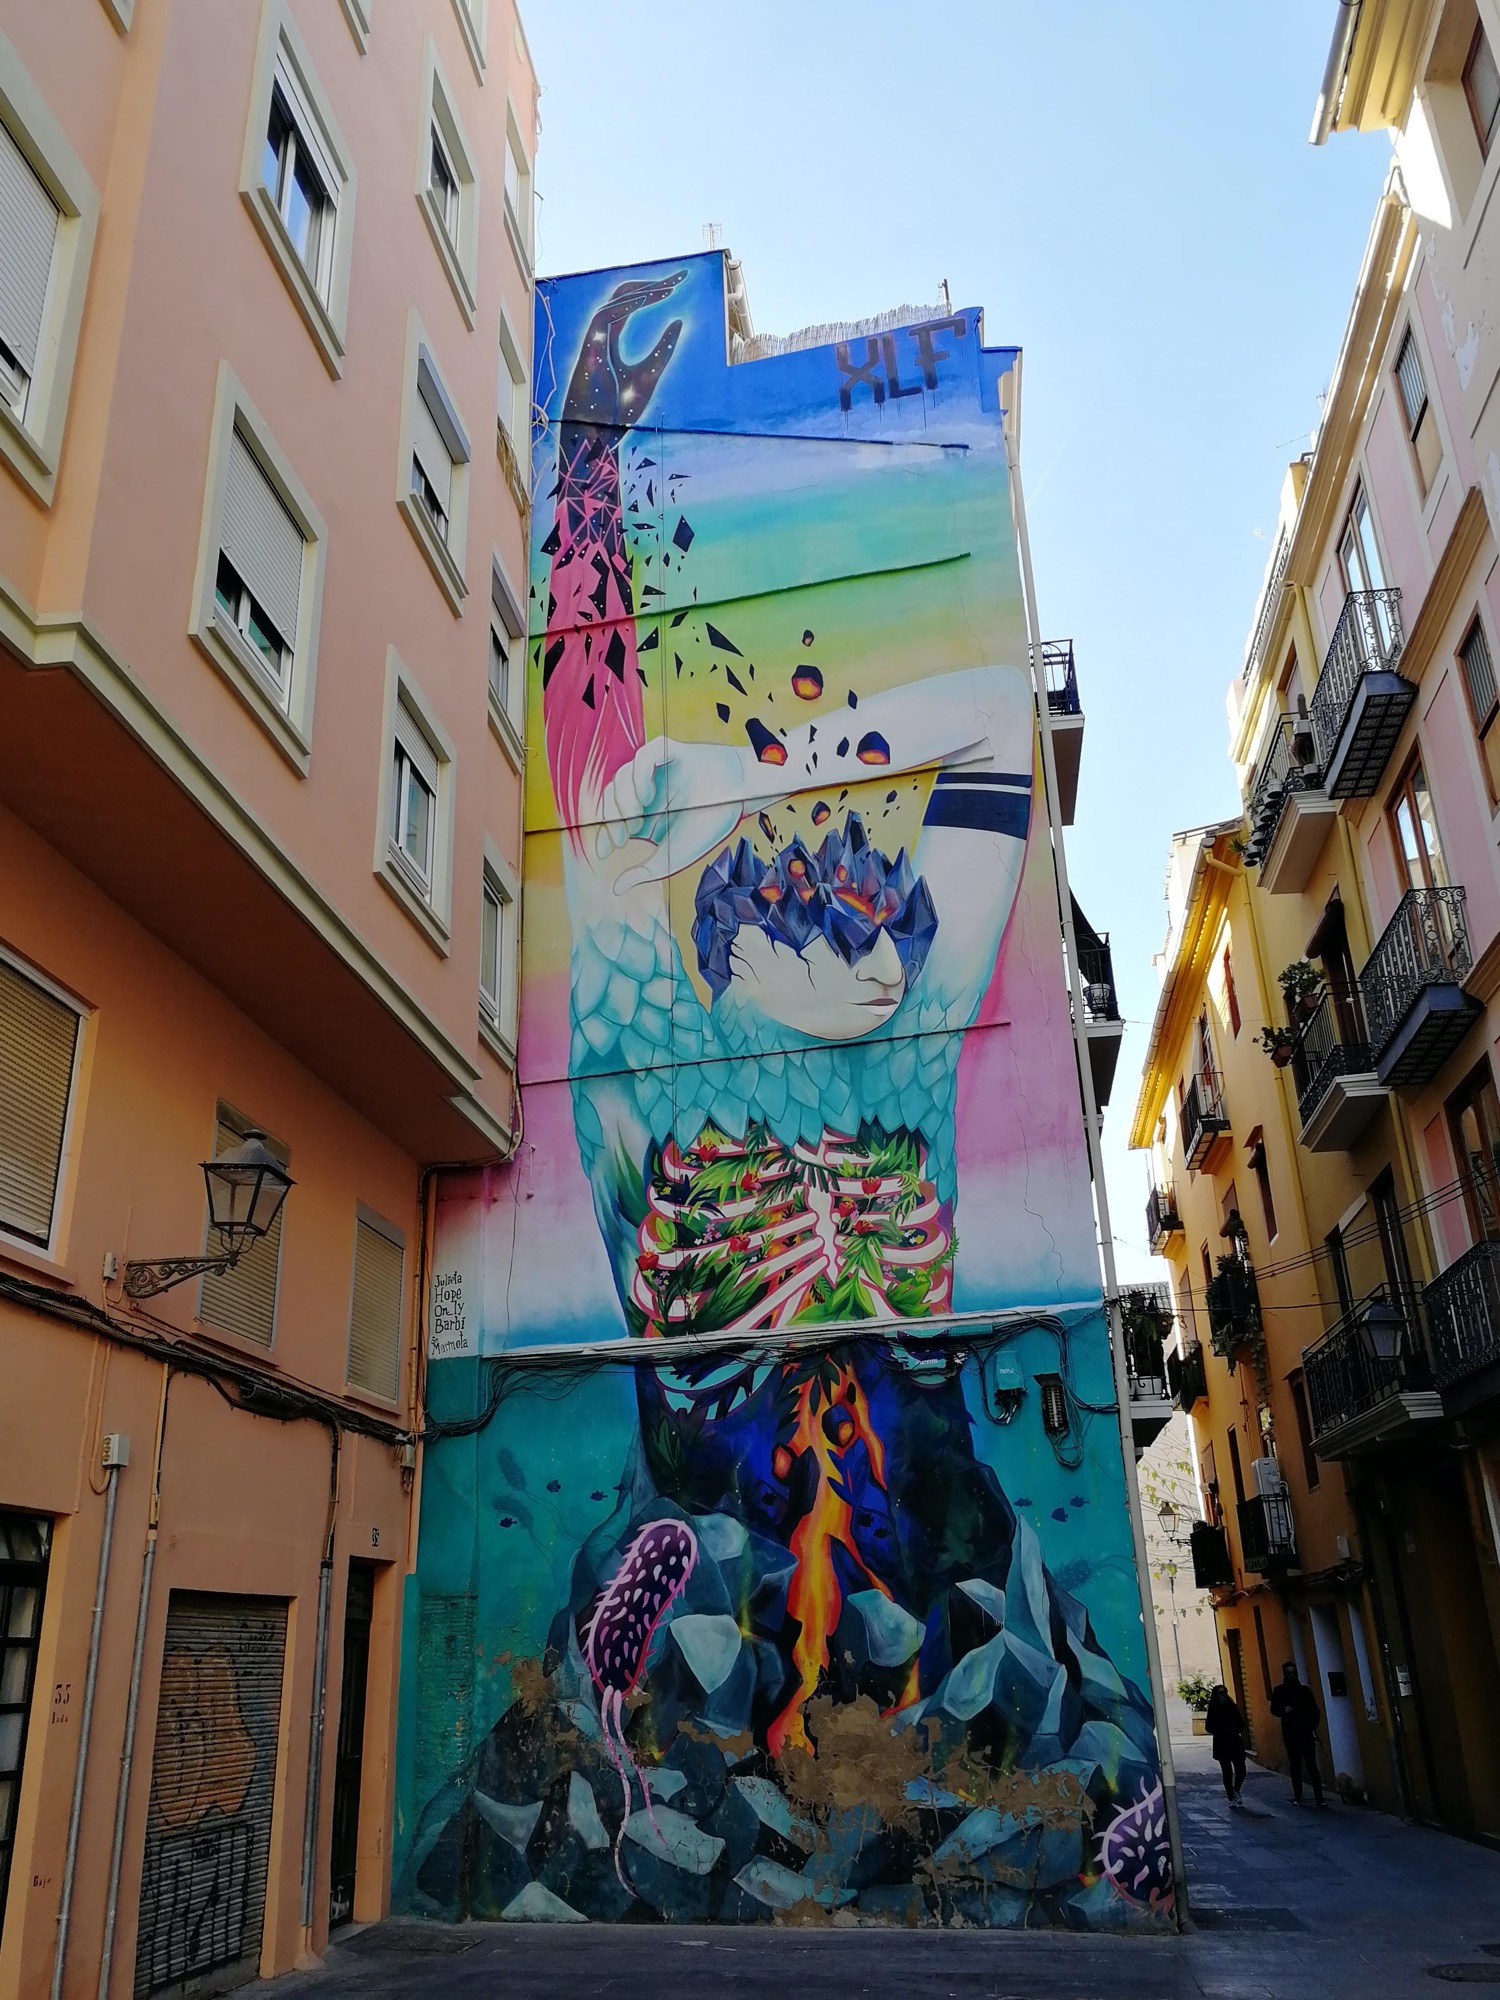 Graffiti 3730  by the artist Julieta xlf captured by Rabot in València Spain